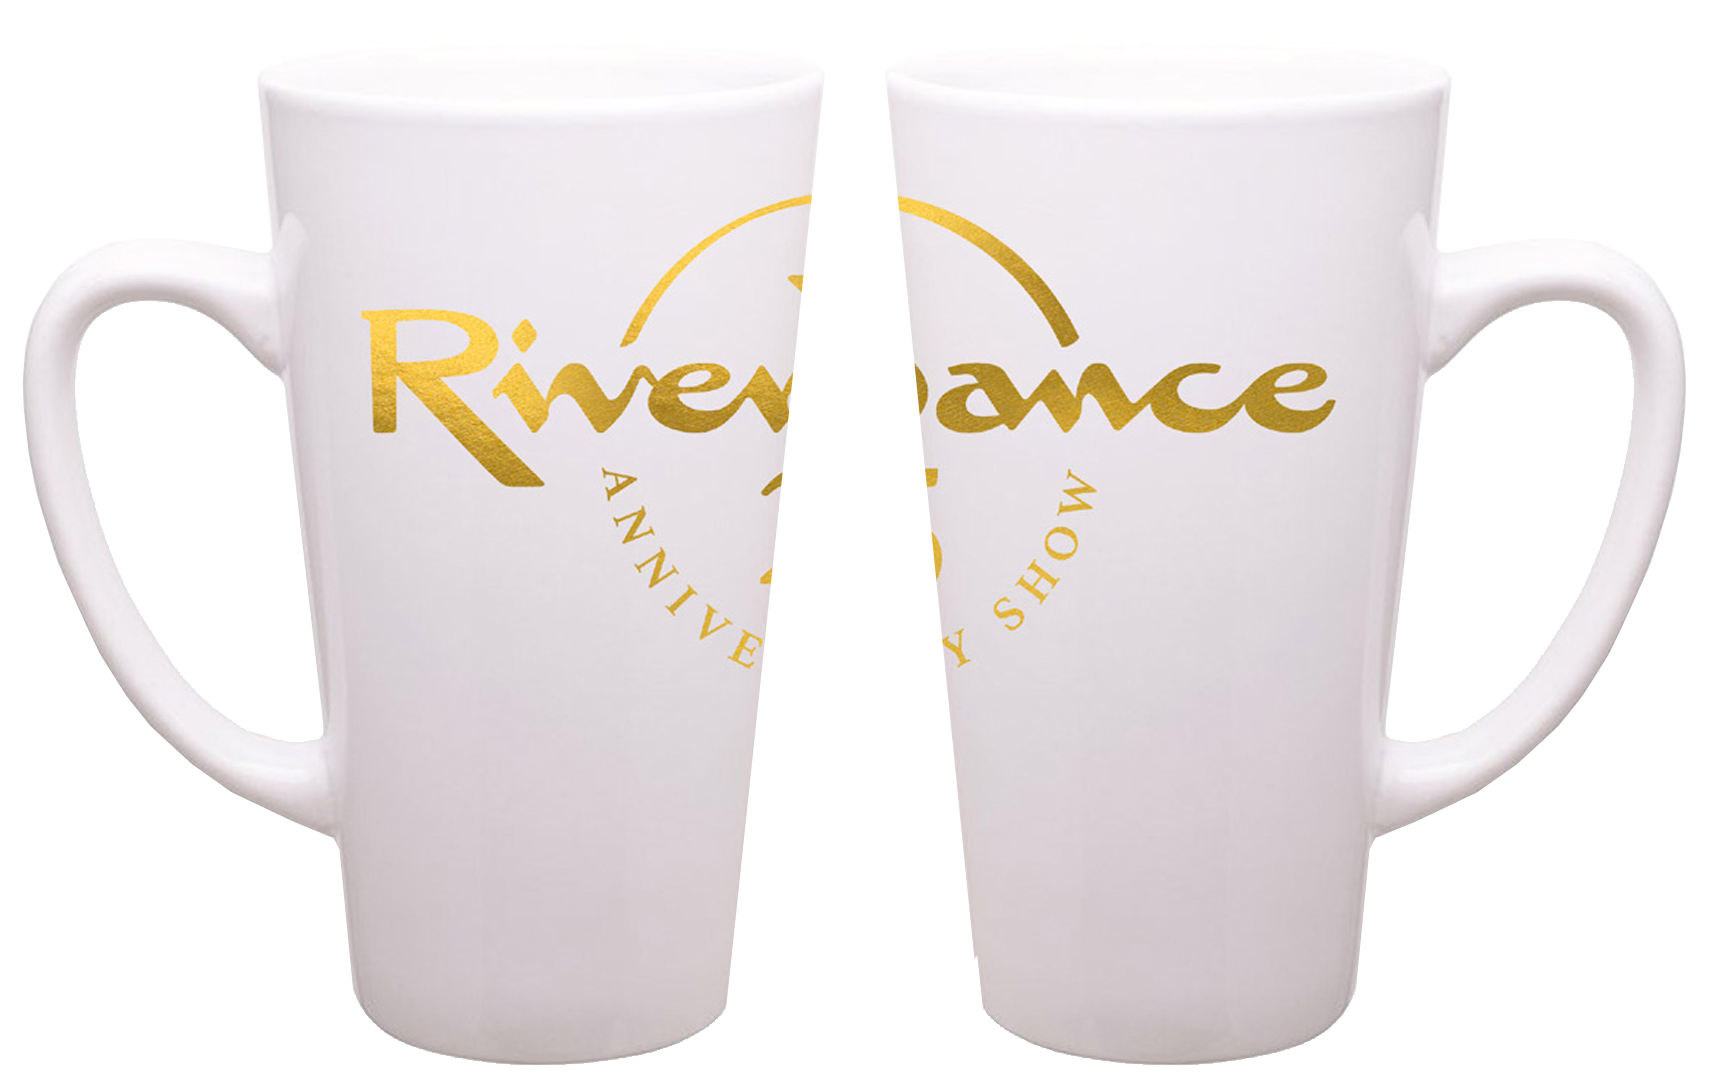 Riverdance 25th Anniversary Mug